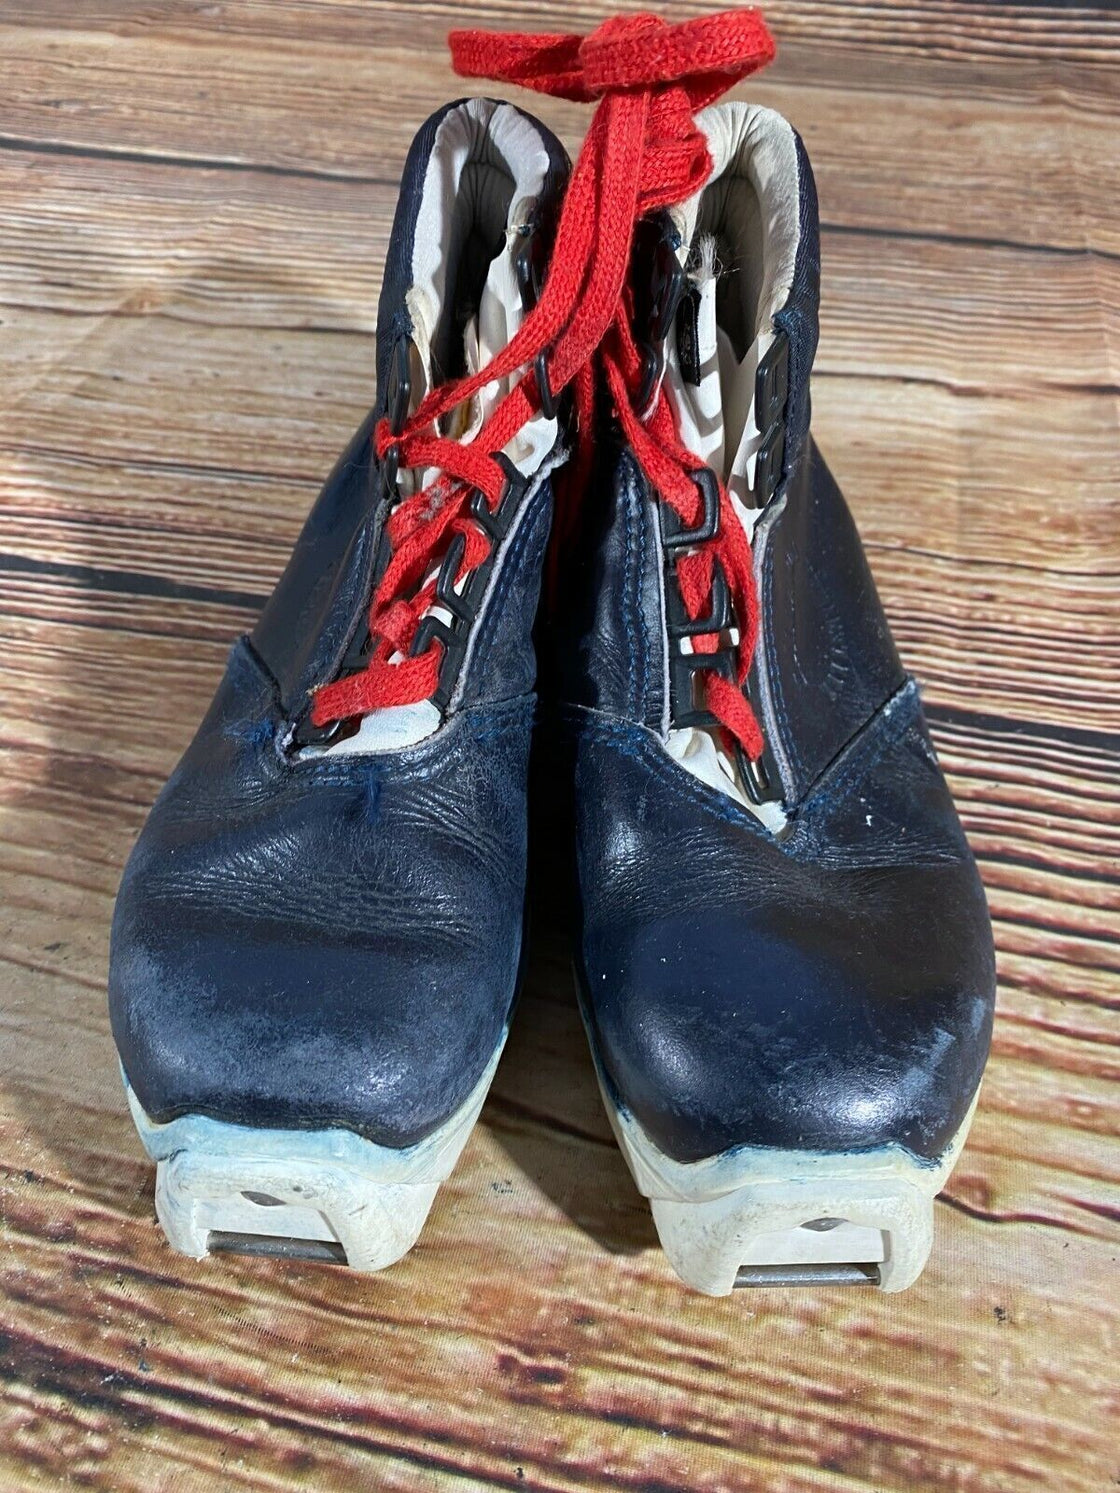 SALOMON Leather Kids Nordic Cross Country Ski Boots Size EU34 US3 SNS S-35